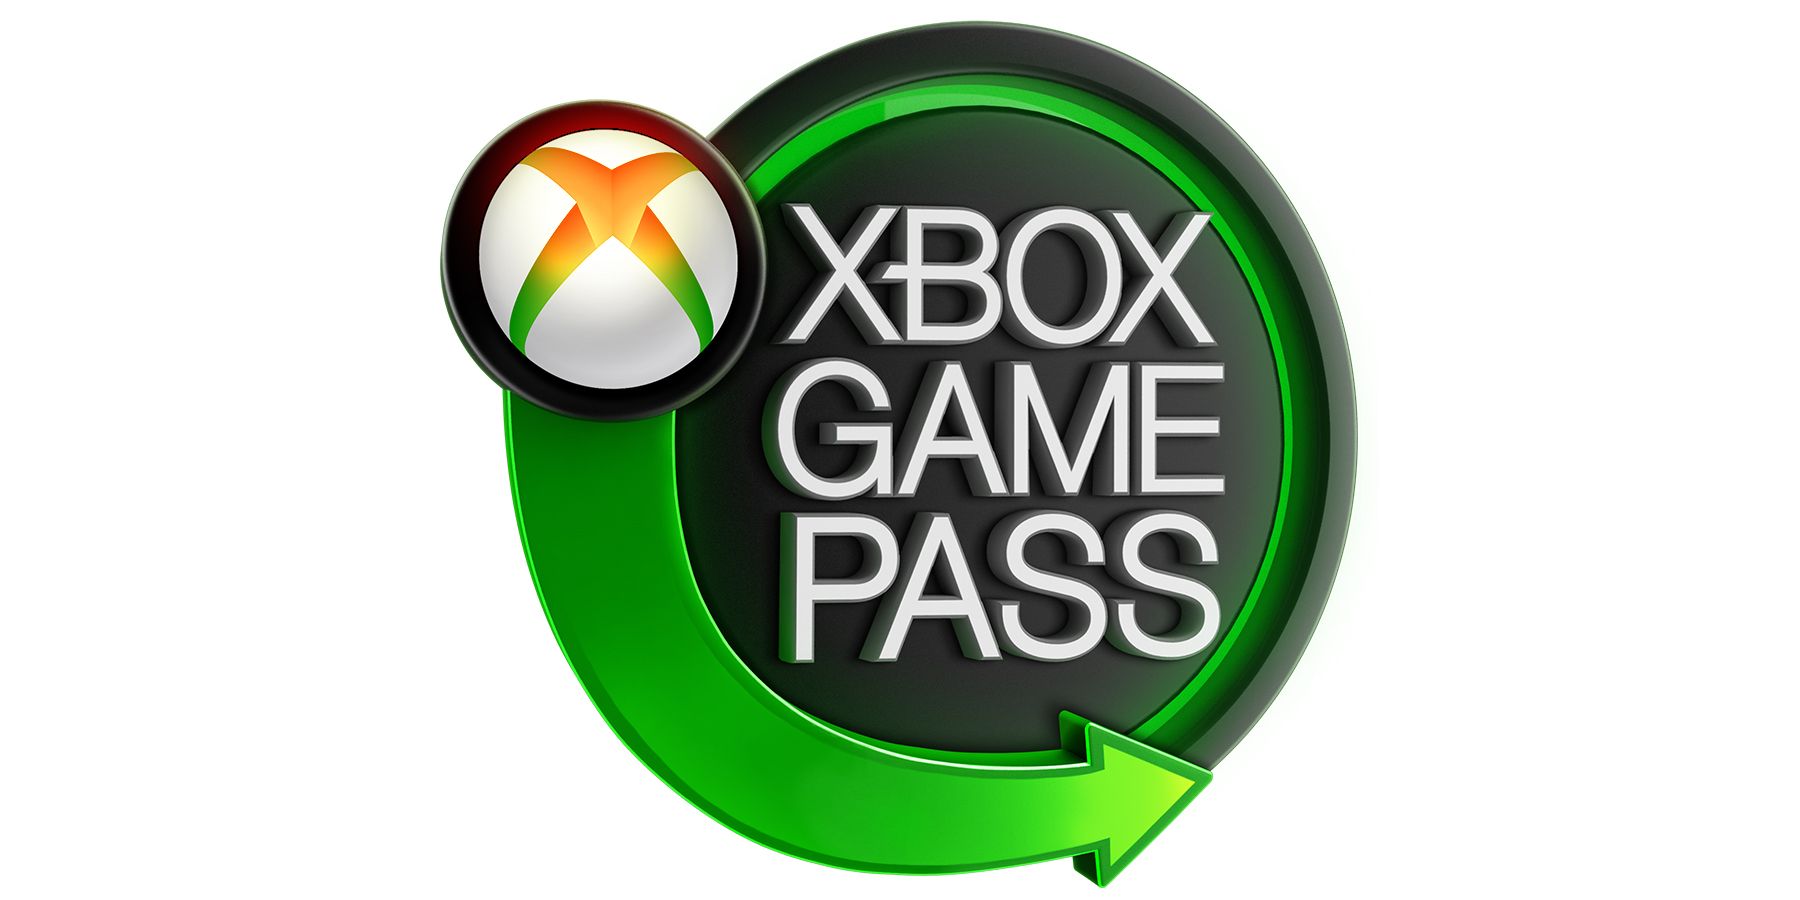 Xbox Game Pass green orange emblem on white background